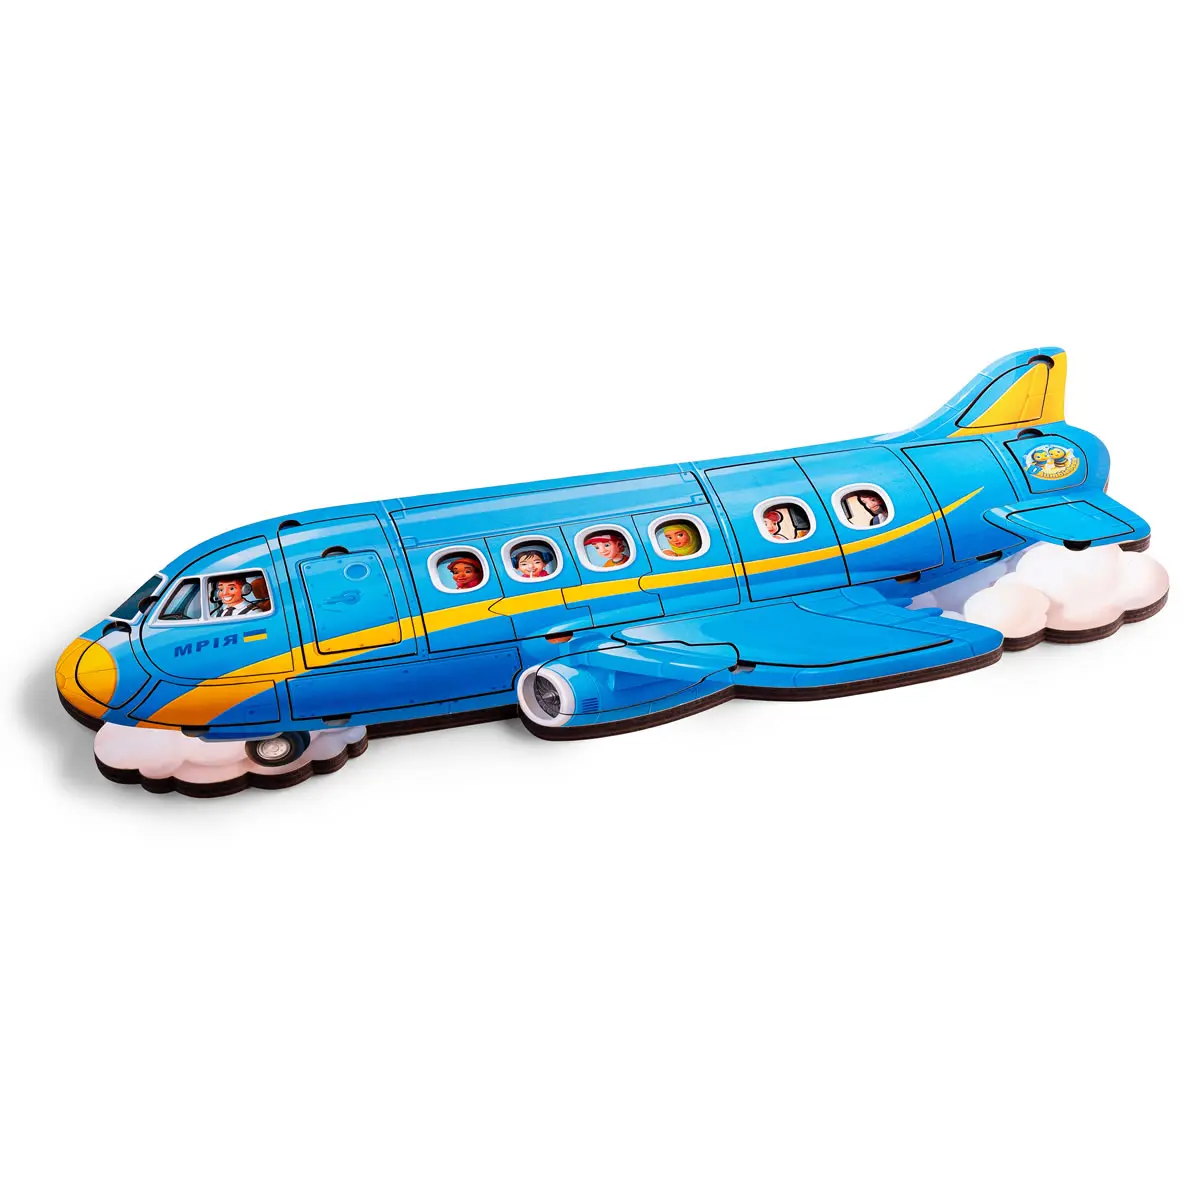 Puzzle - Airplane